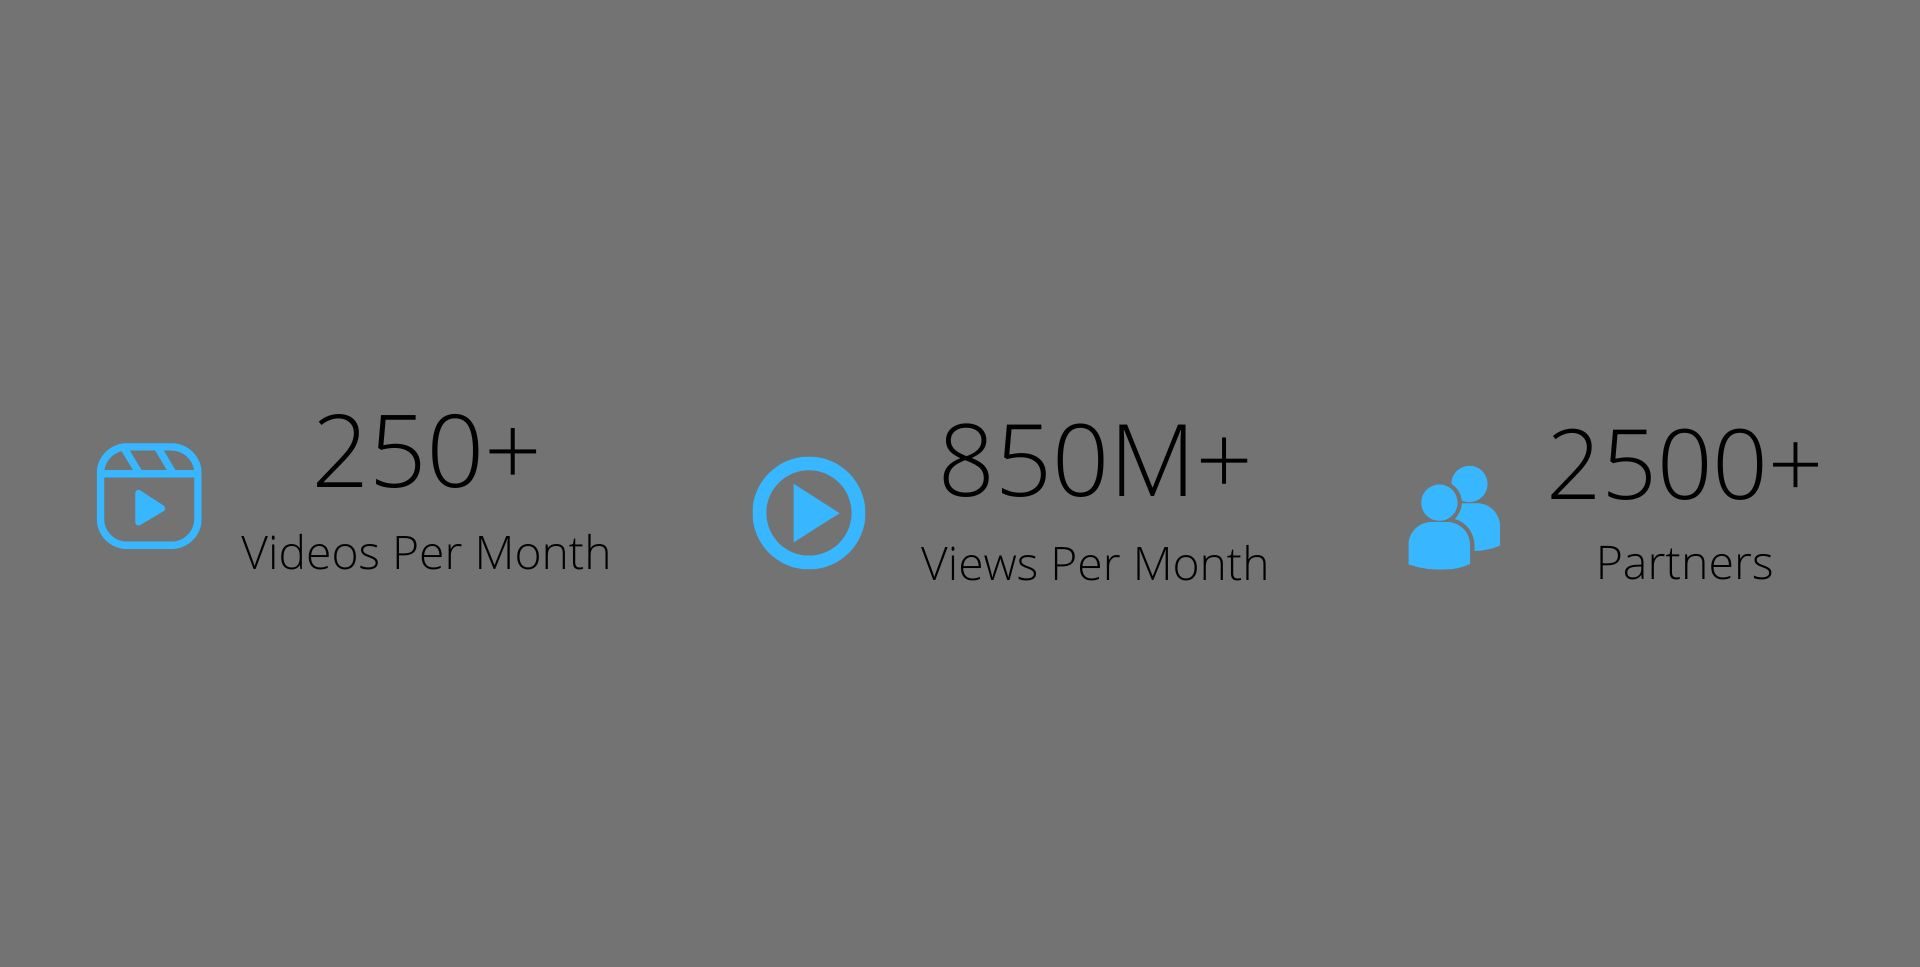 850M+ Views Per Month